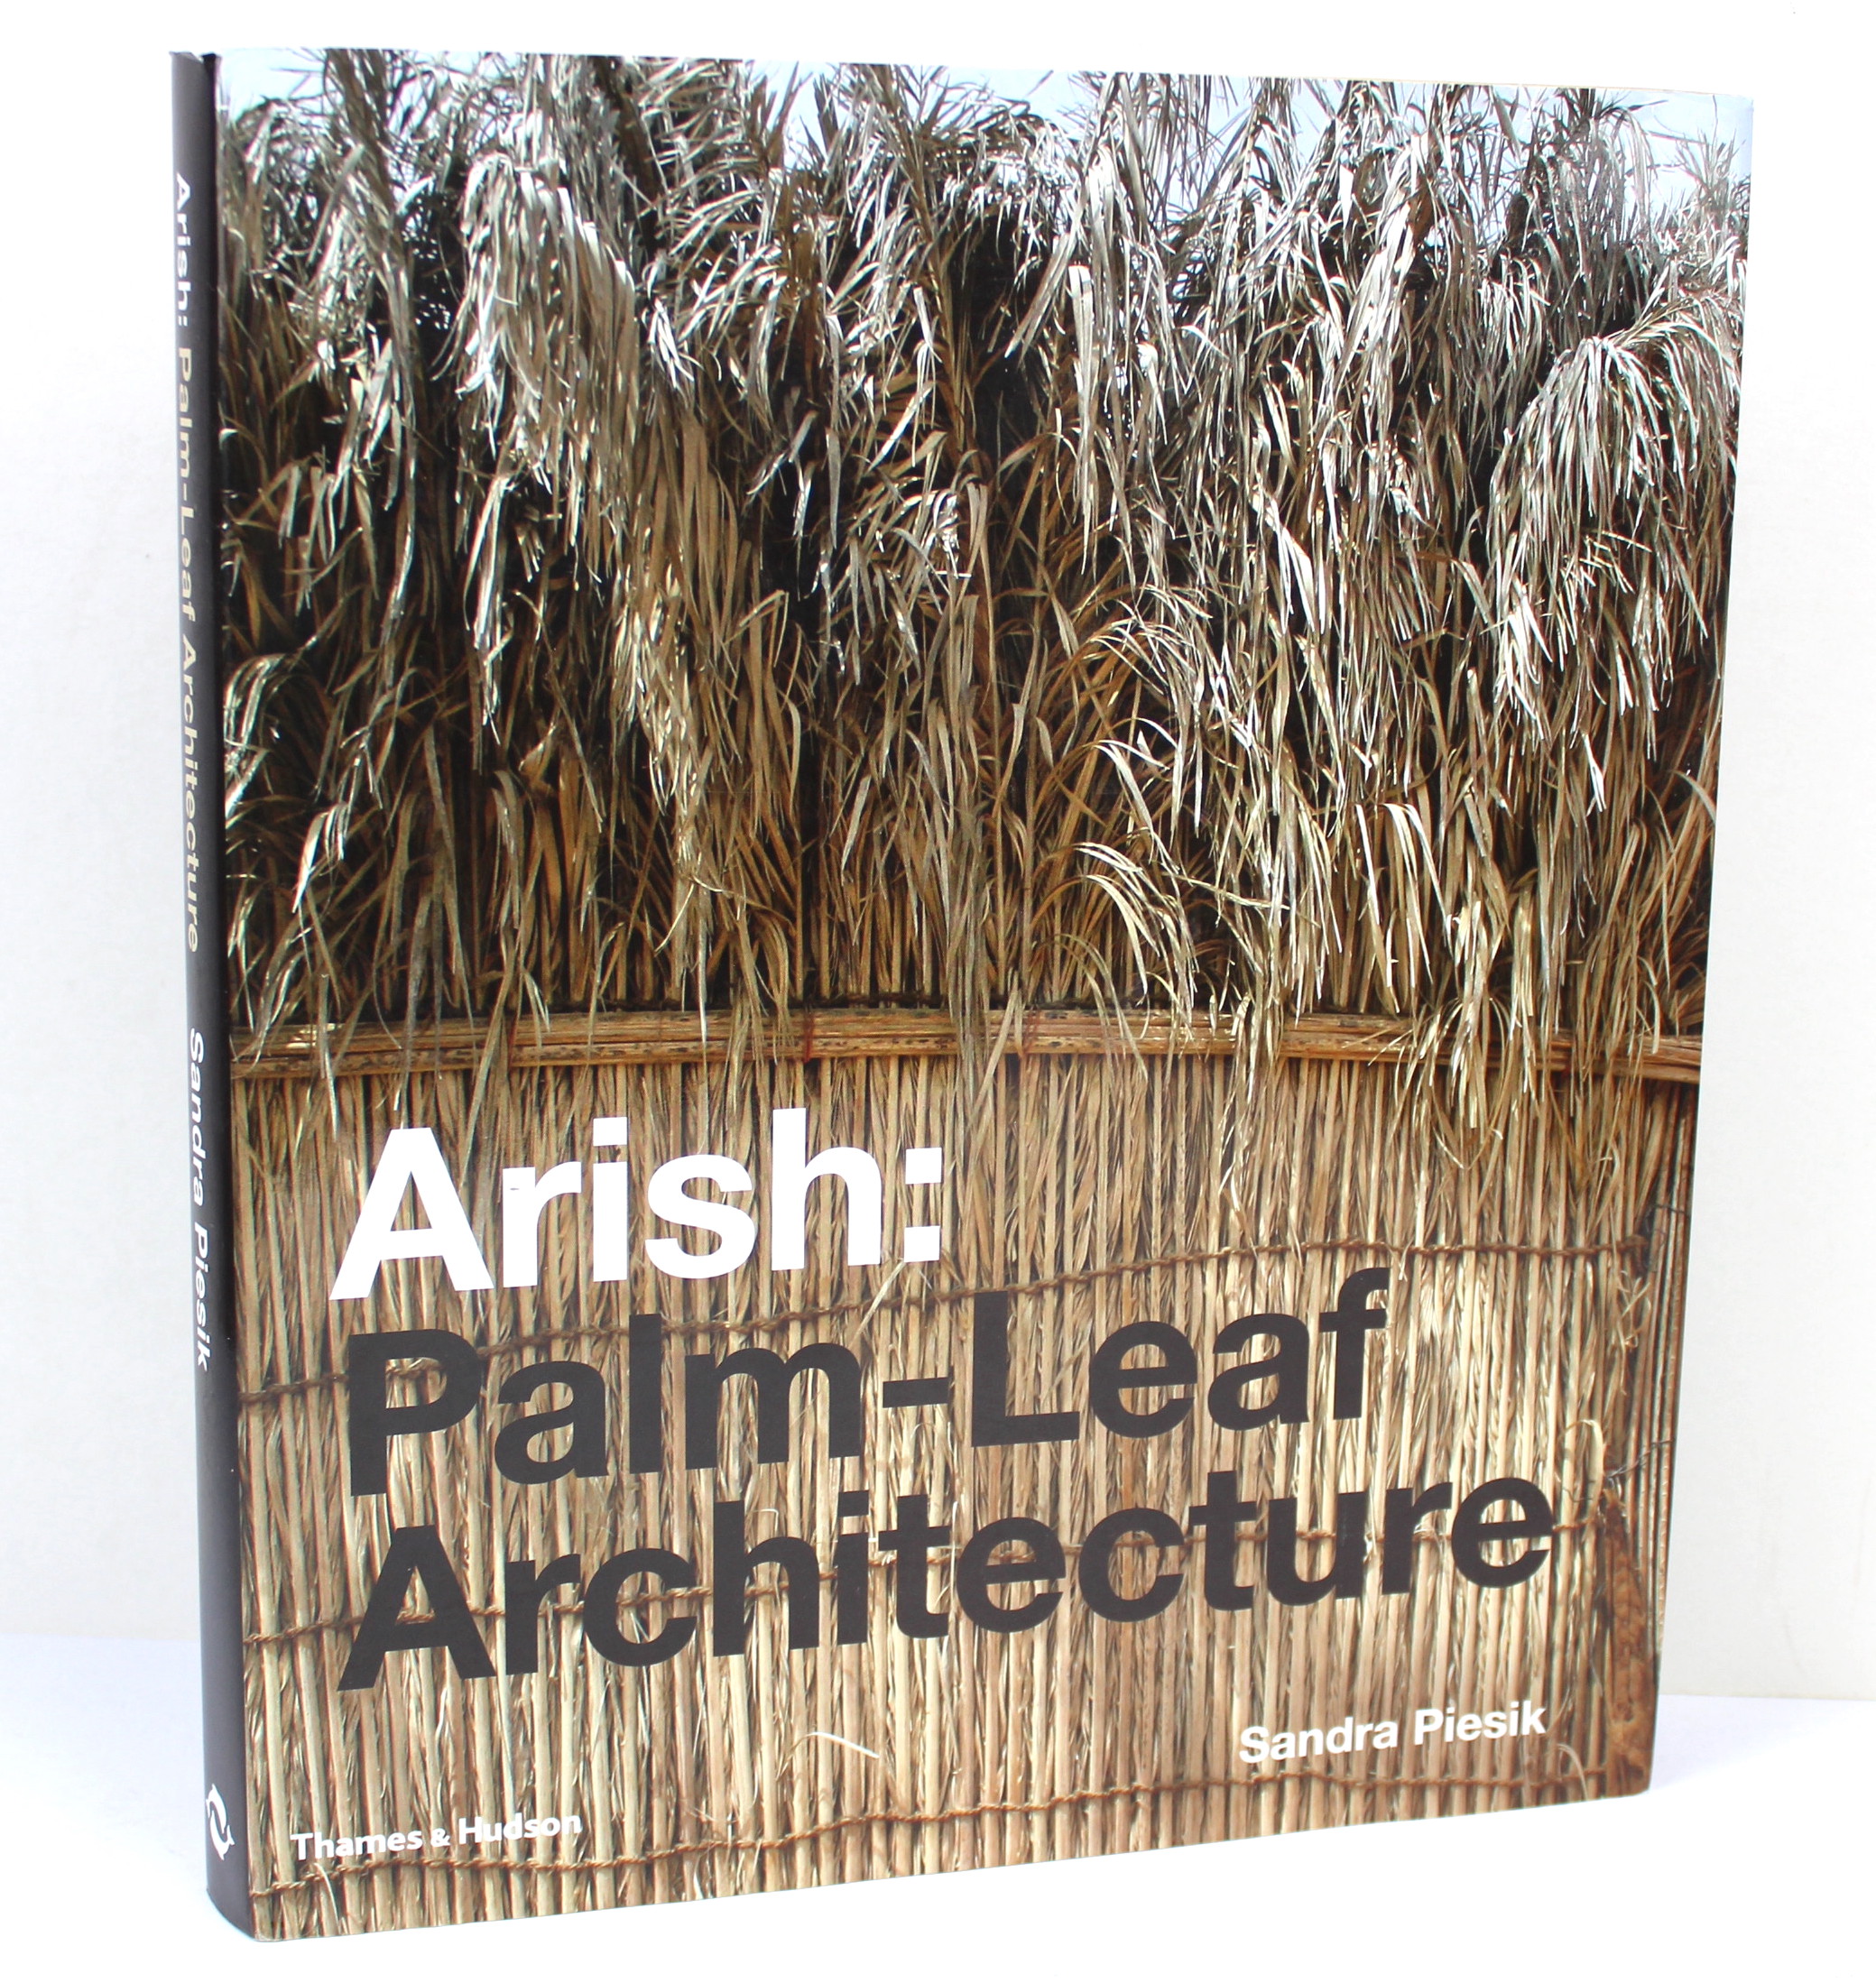 Arish: Palm-Leaf Architecture /anglais - Piesik, Sandra